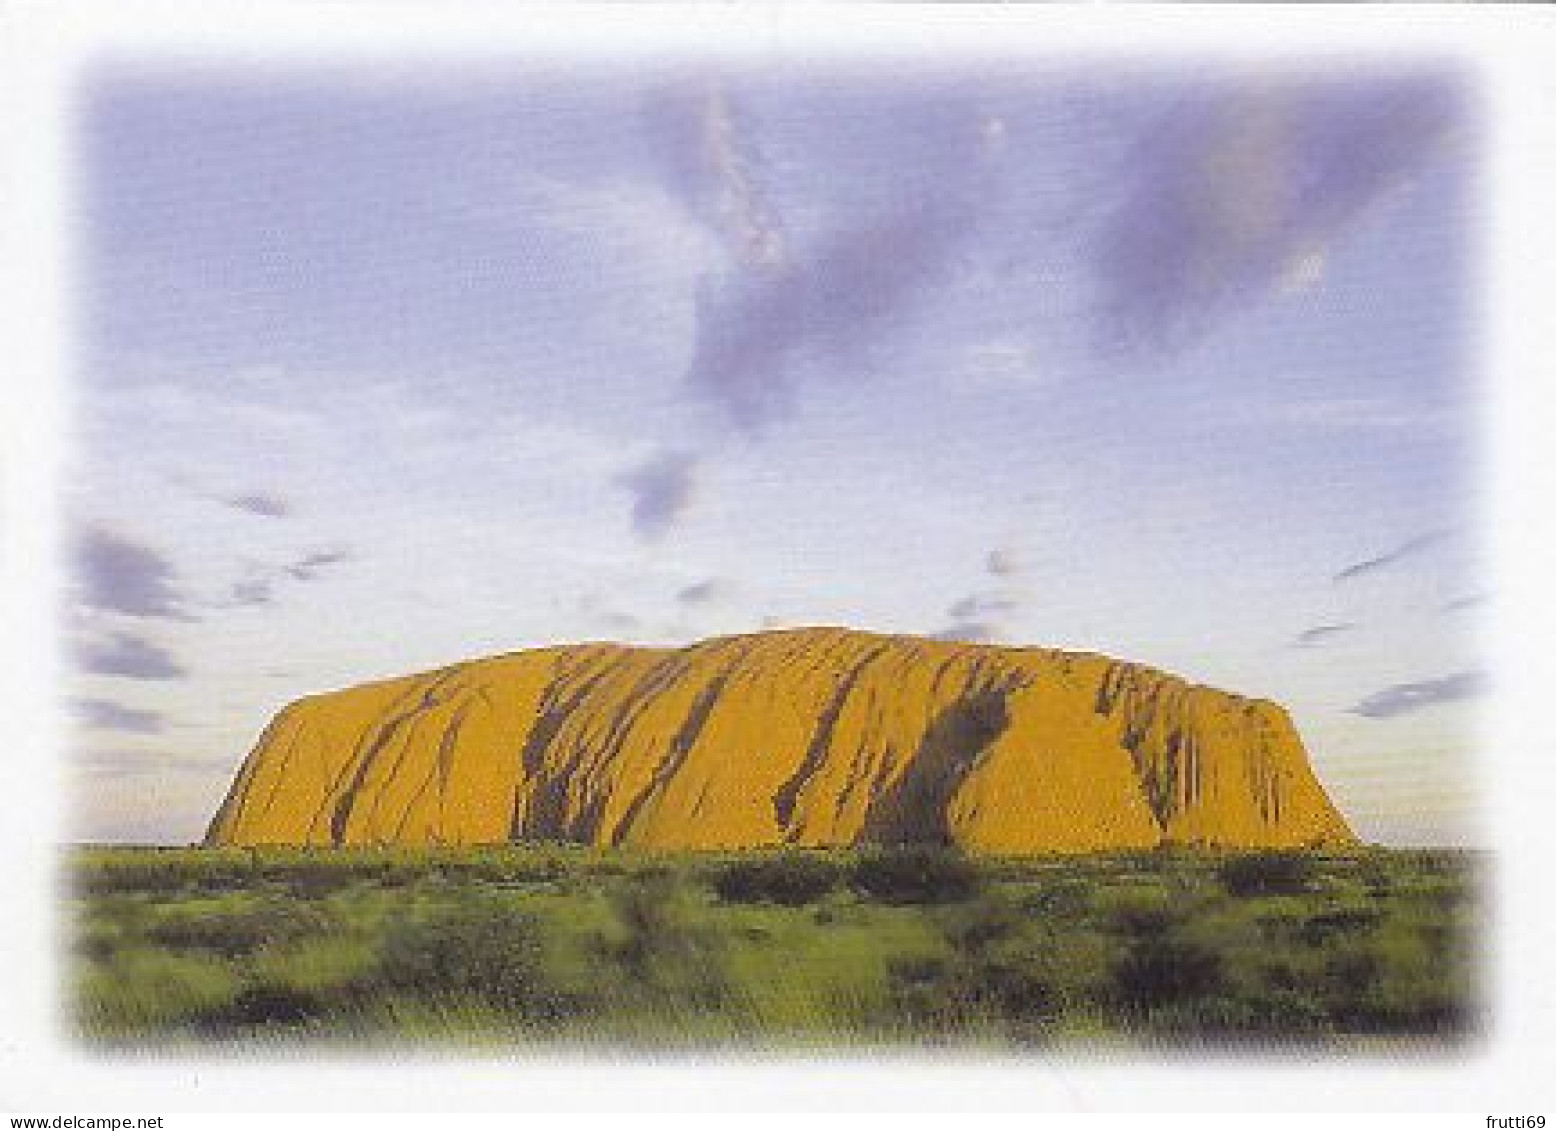 AK 210981 AUSTRALIA - Ayers Rock - Uluru & The Olgas